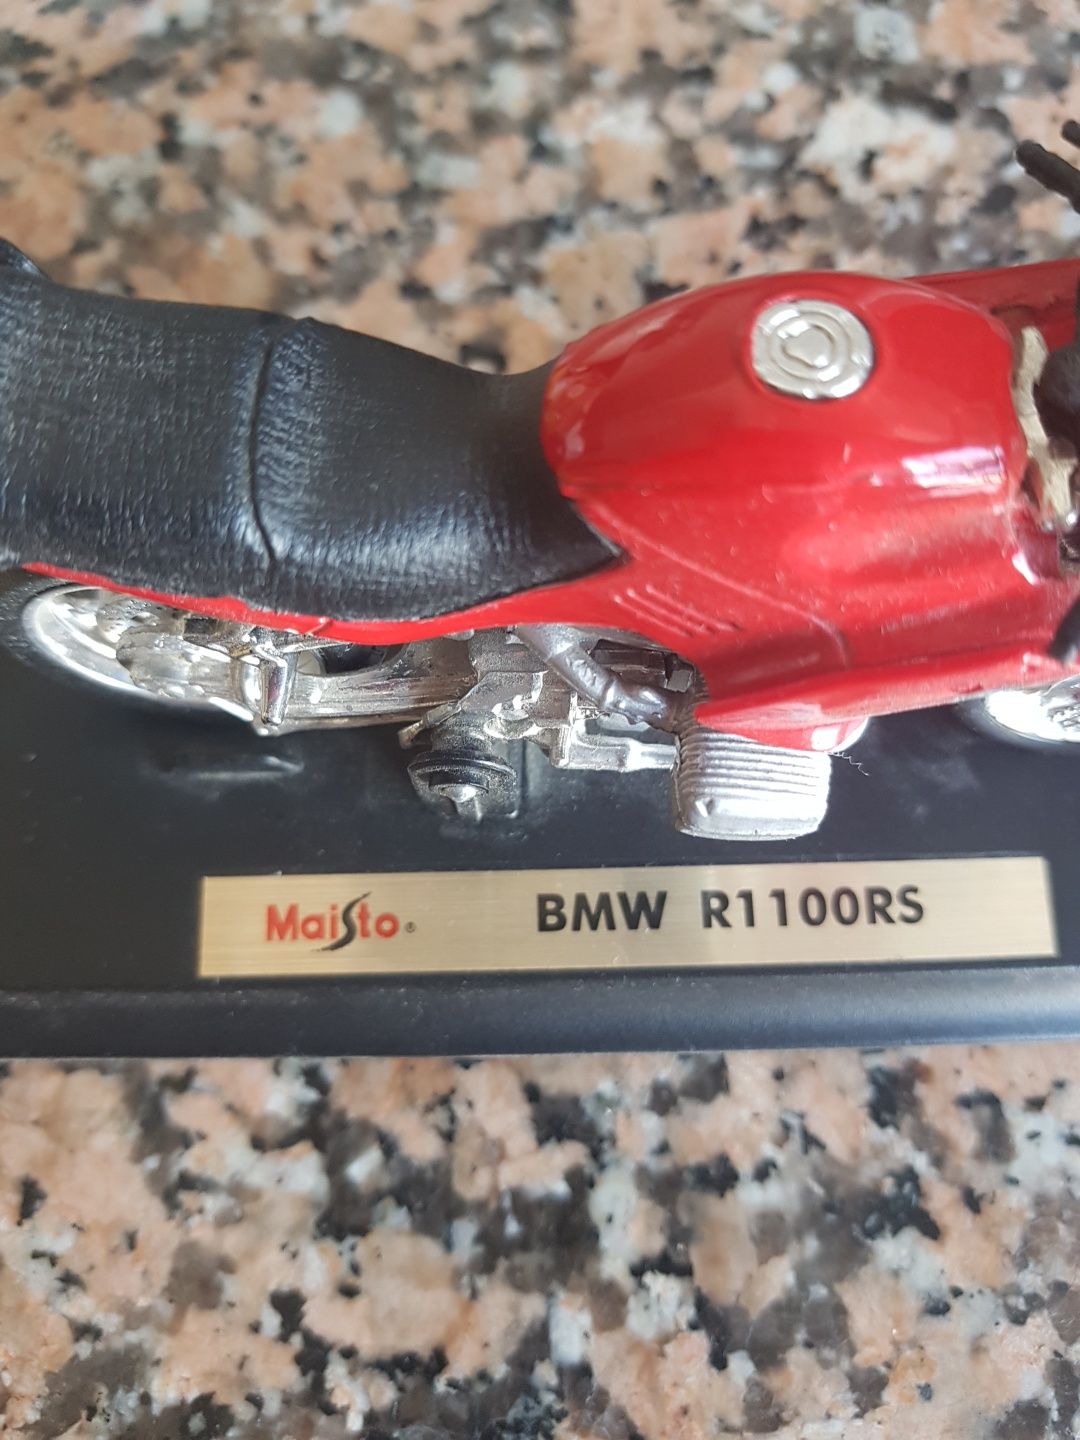 Moto Miniatura BMW R1100RS
Maisto